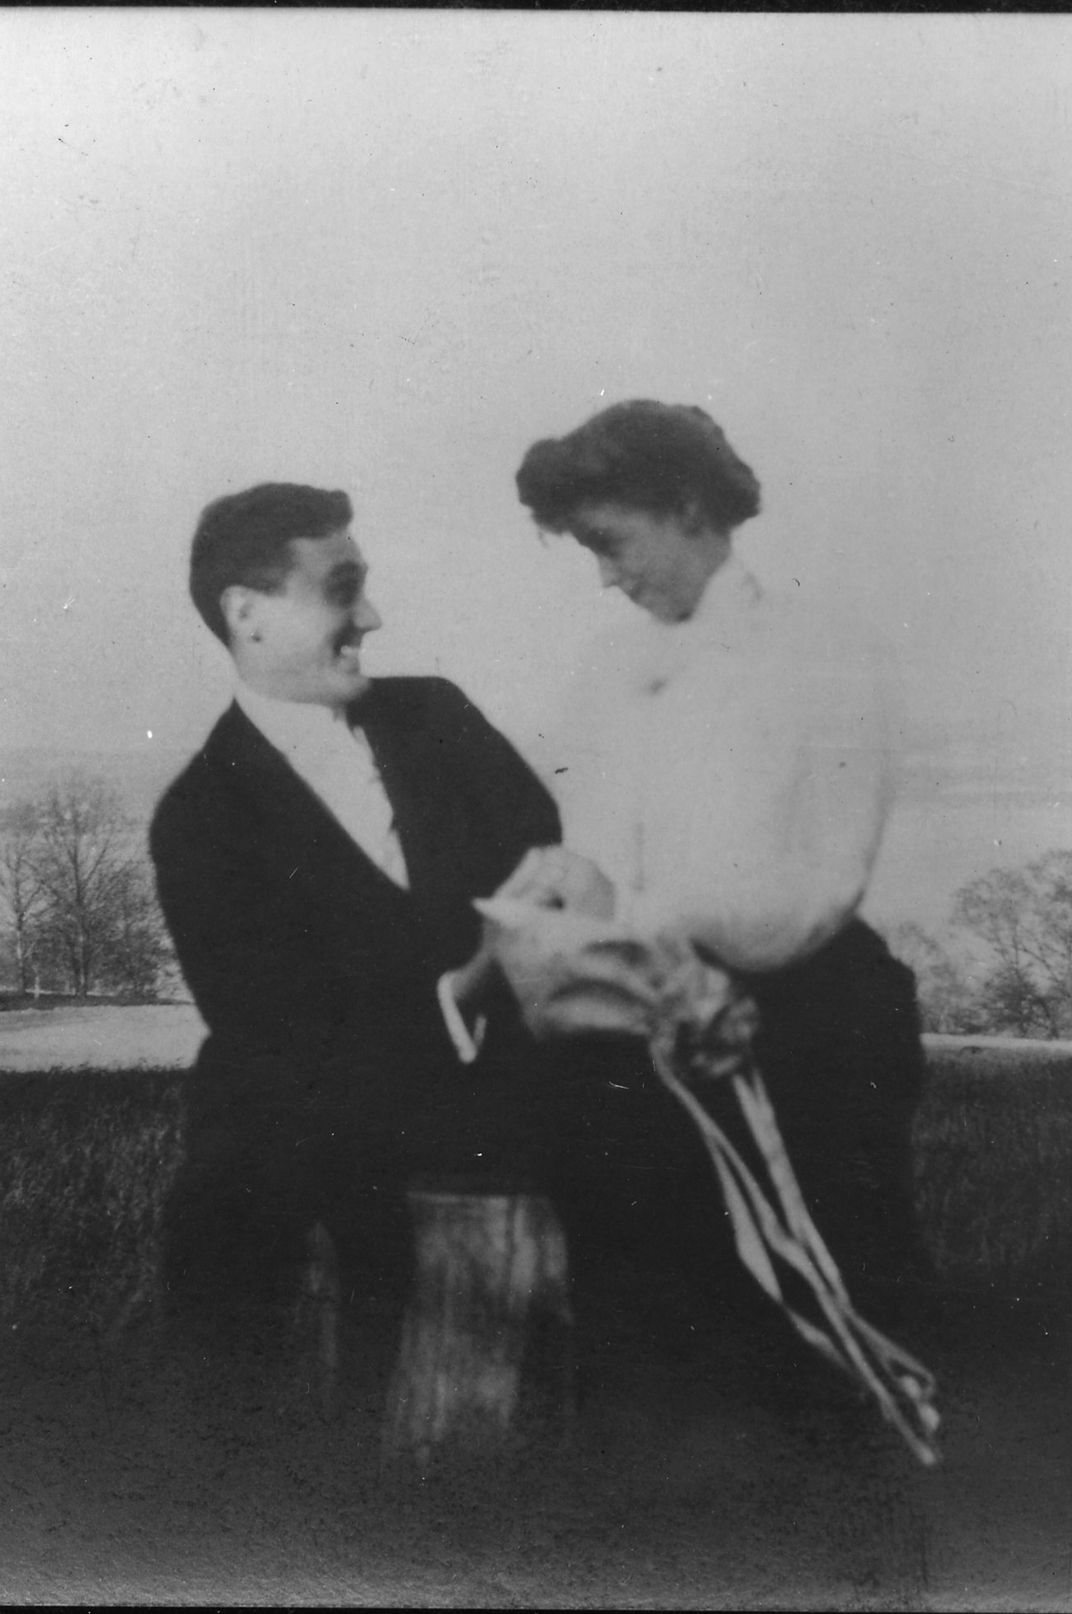 Informal snapshot of Franklin and Eleanor in 1905